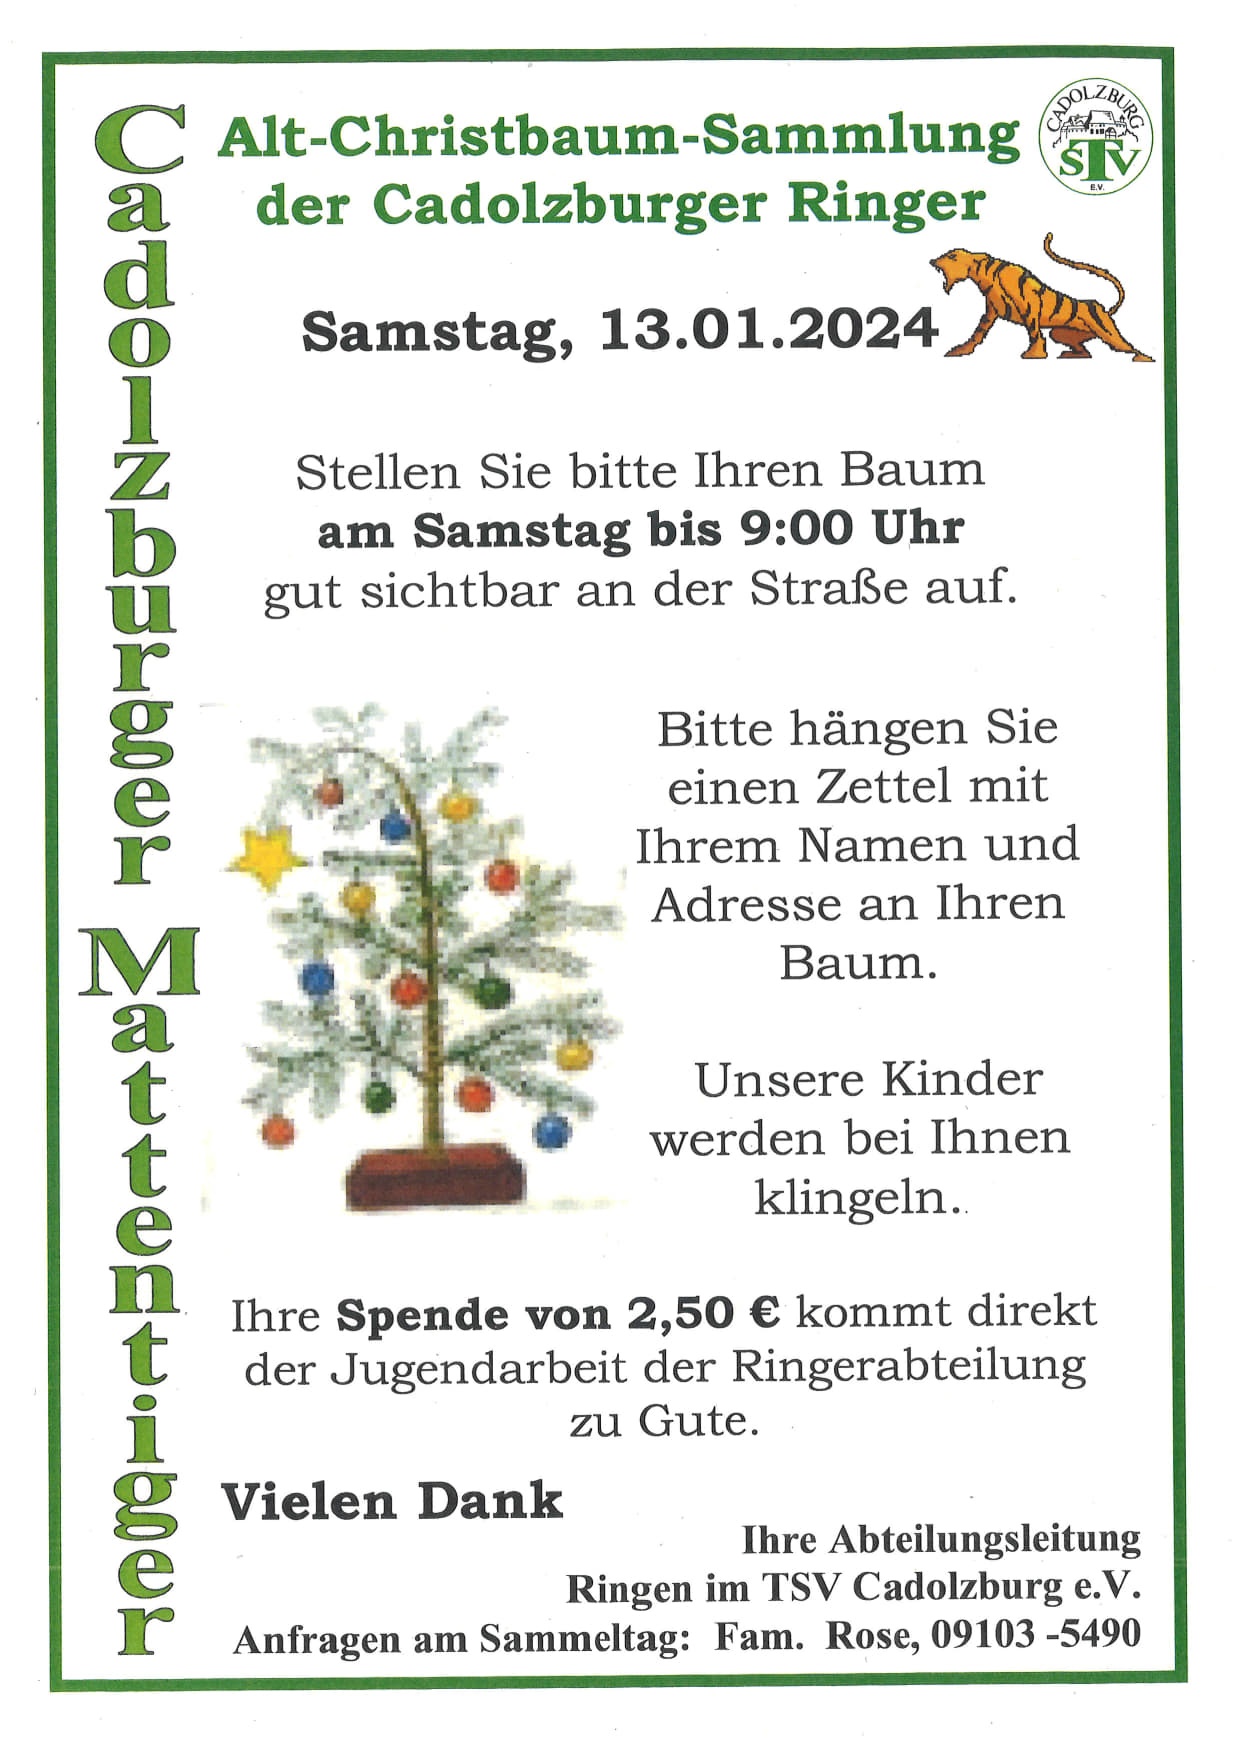 Alt-Christbaum-Sammlung der Cadolzburger Ringer Samstag, 13.01.2024